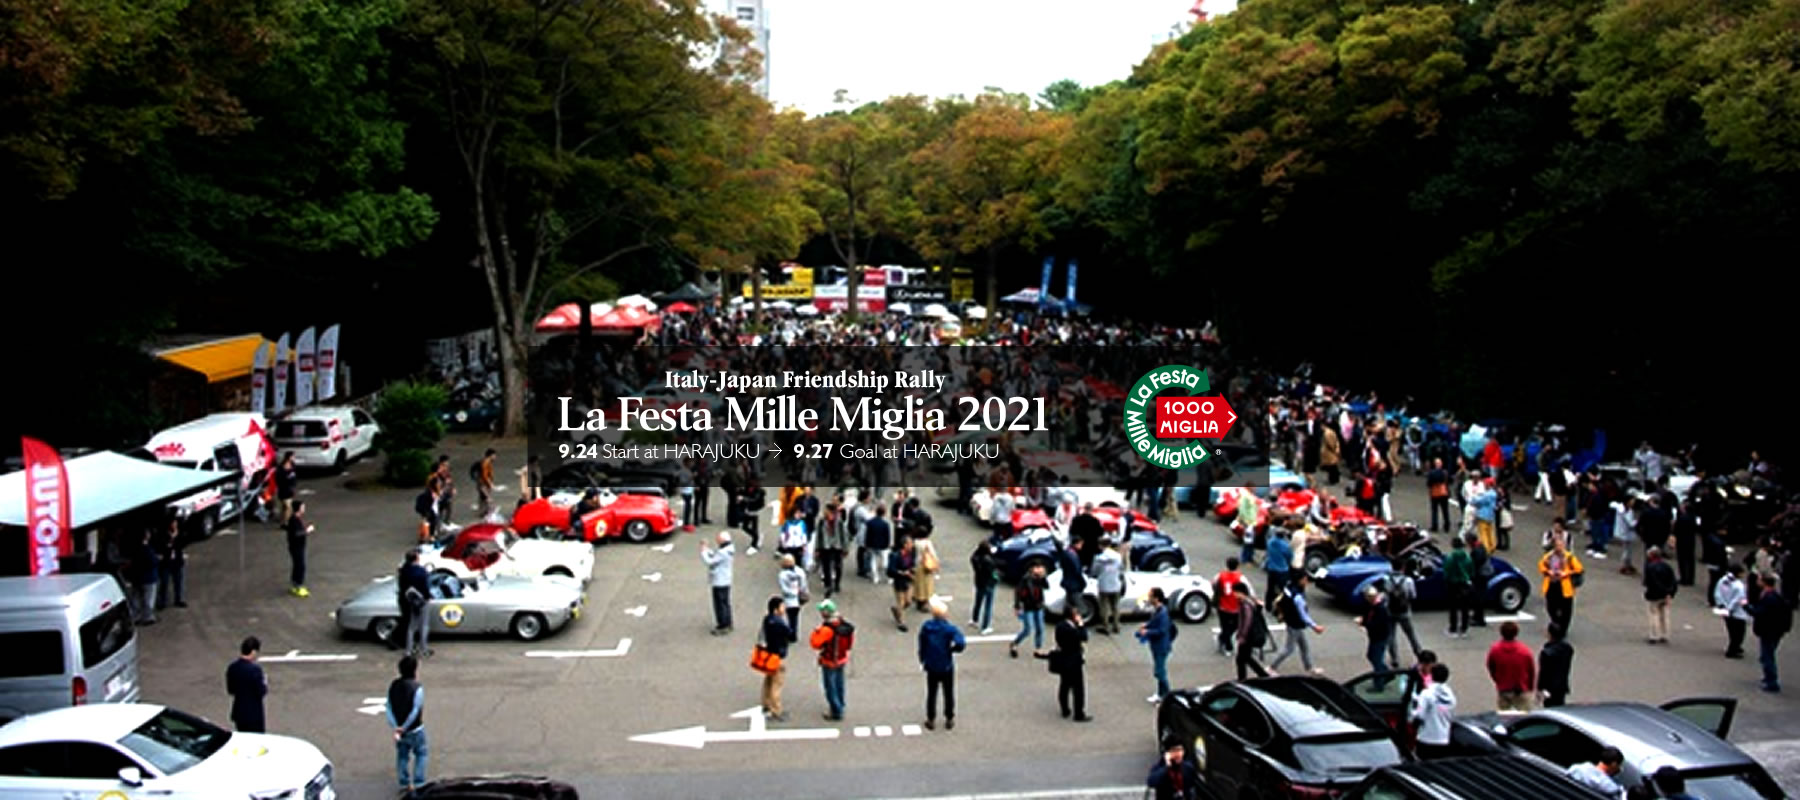 La Festa Mille Miglia 2021 ラ フェスタ ミッレミリア 2021